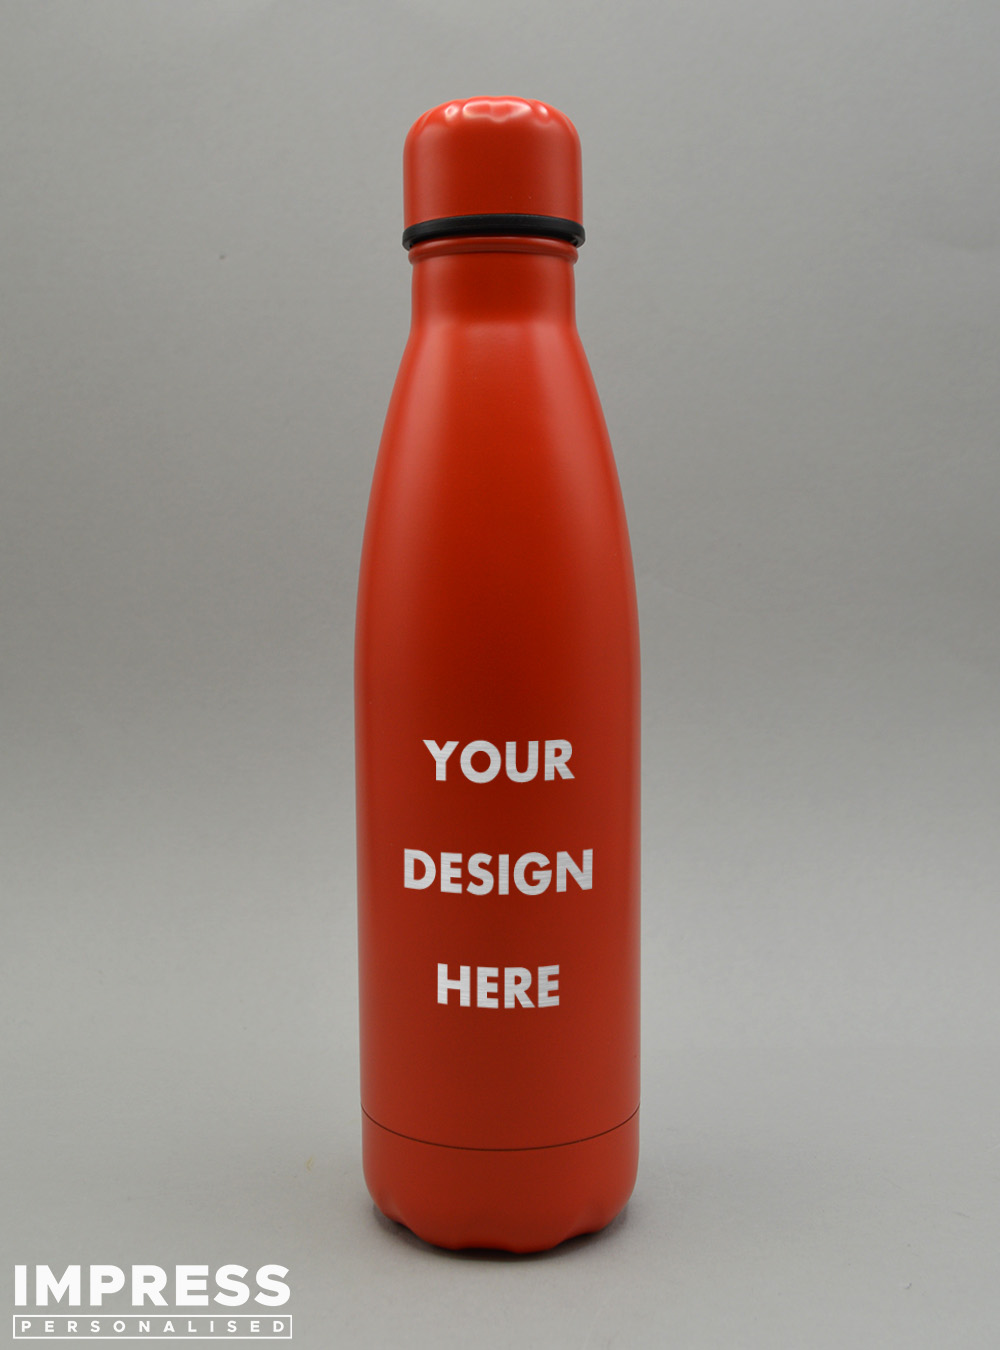 https://impresspersonalised.com/wp-content/uploads/2021/05/thermos-bottle-design-your-own-5.jpg